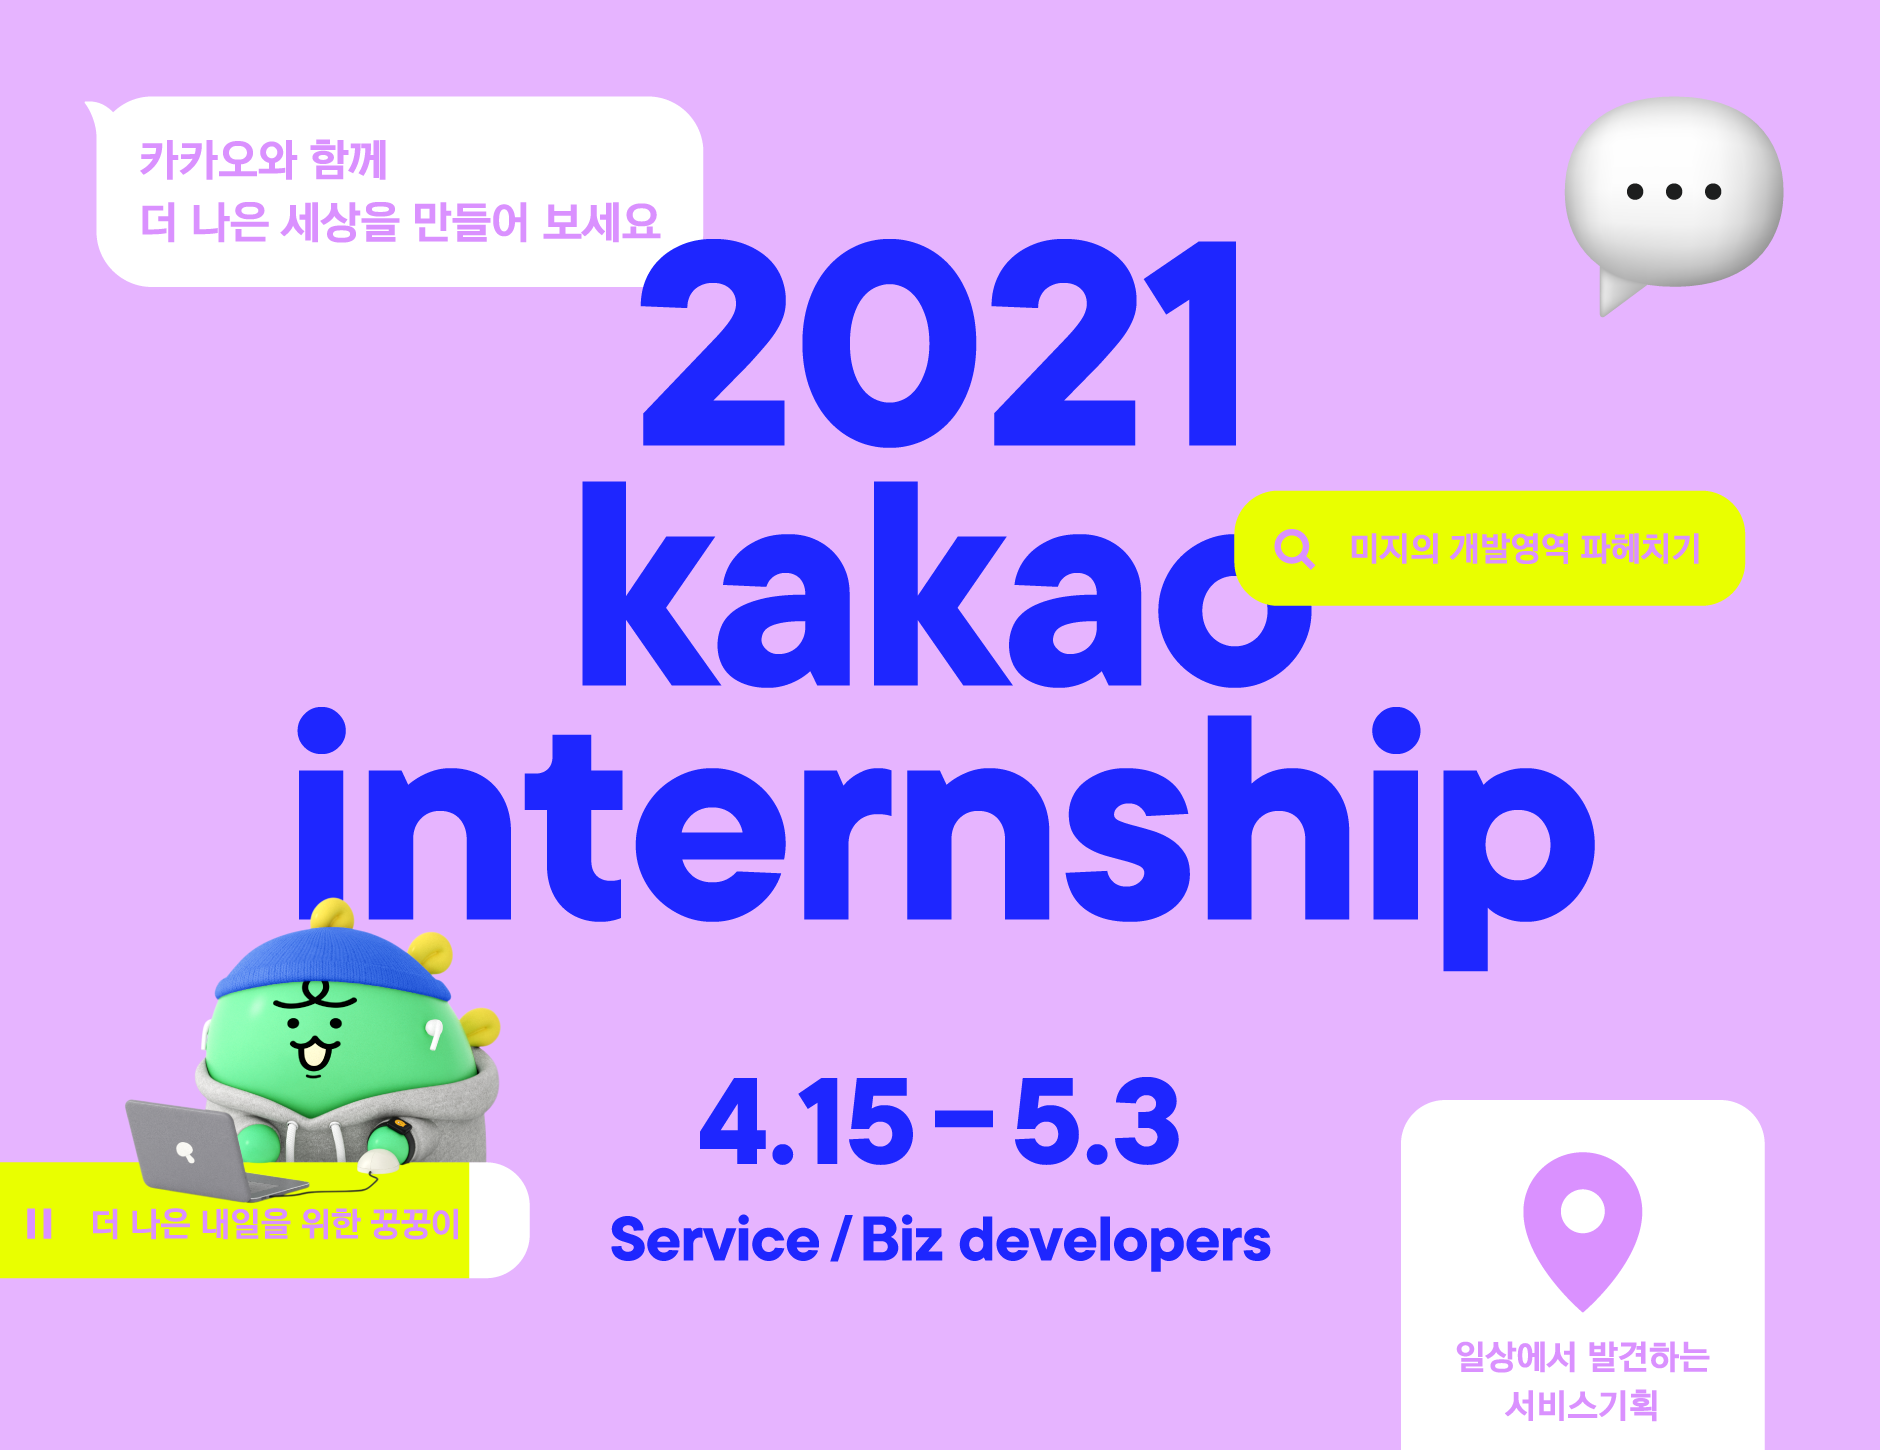 2021 kakao internship 4.15 - 5.3 Service / Biz developers